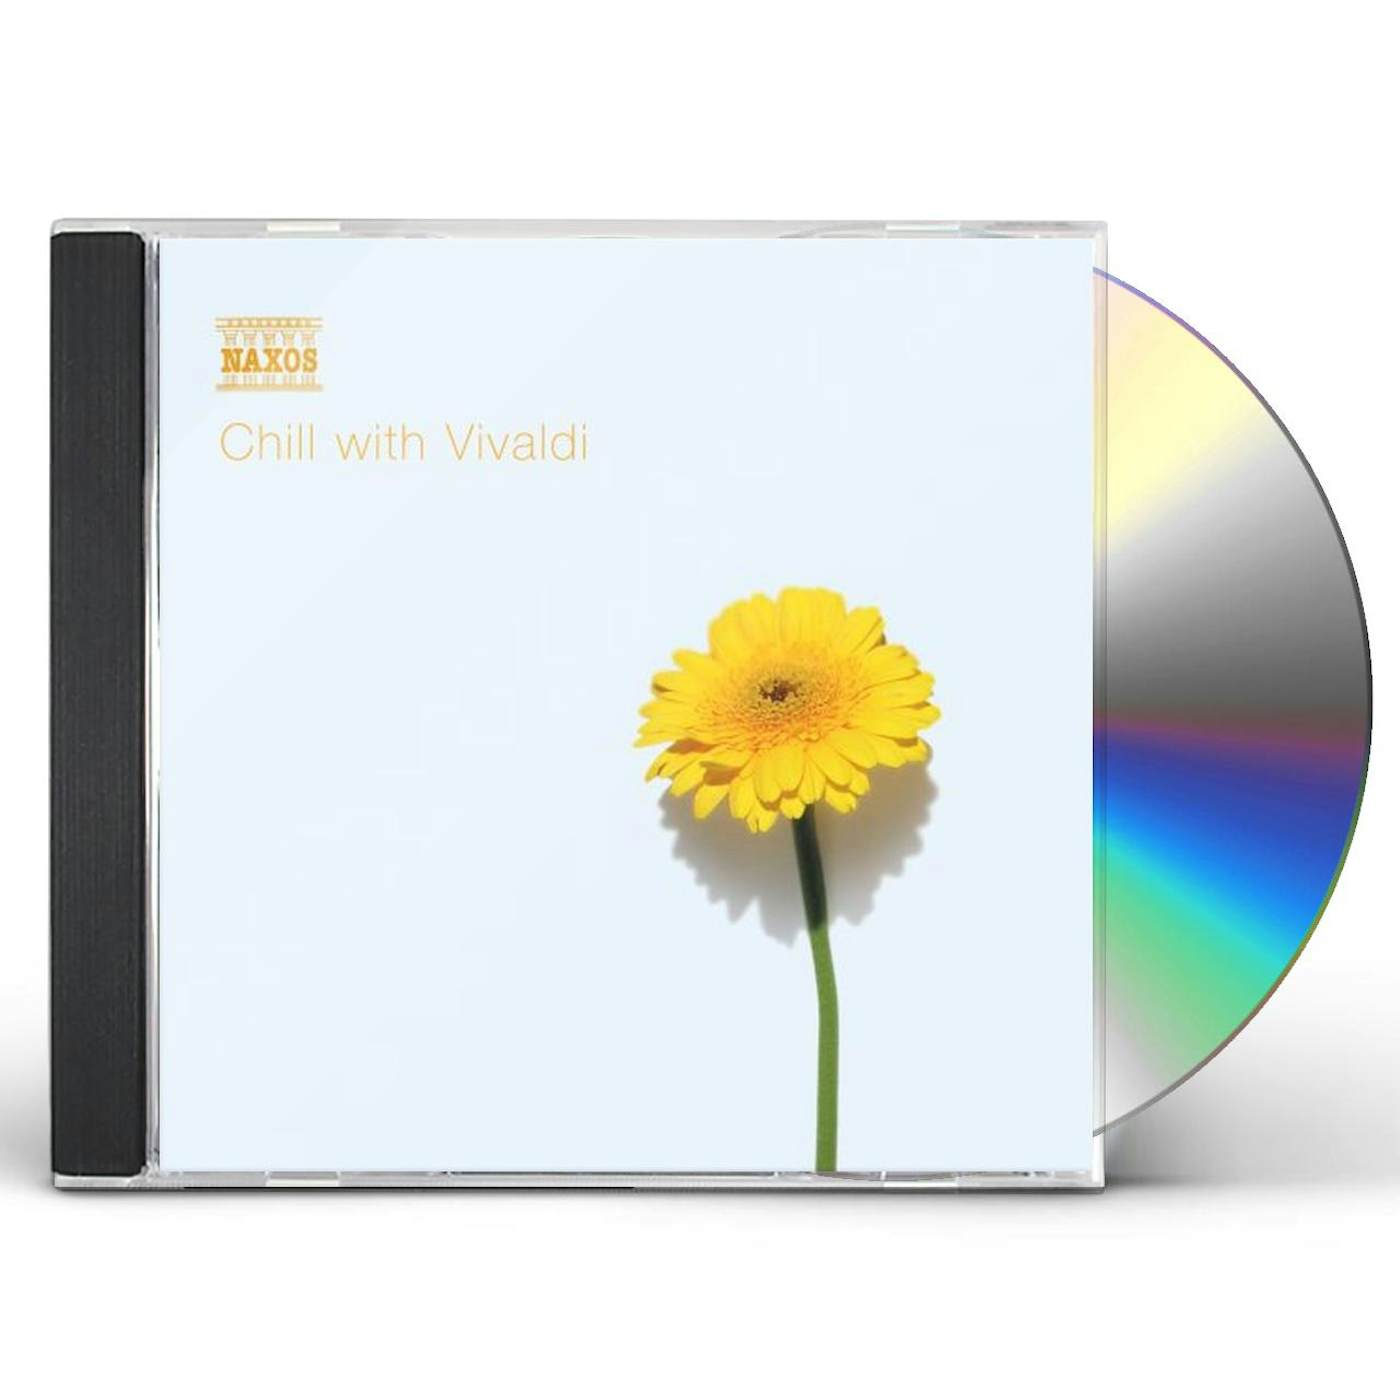 CHILL WITH Antonio Vivaldi CD